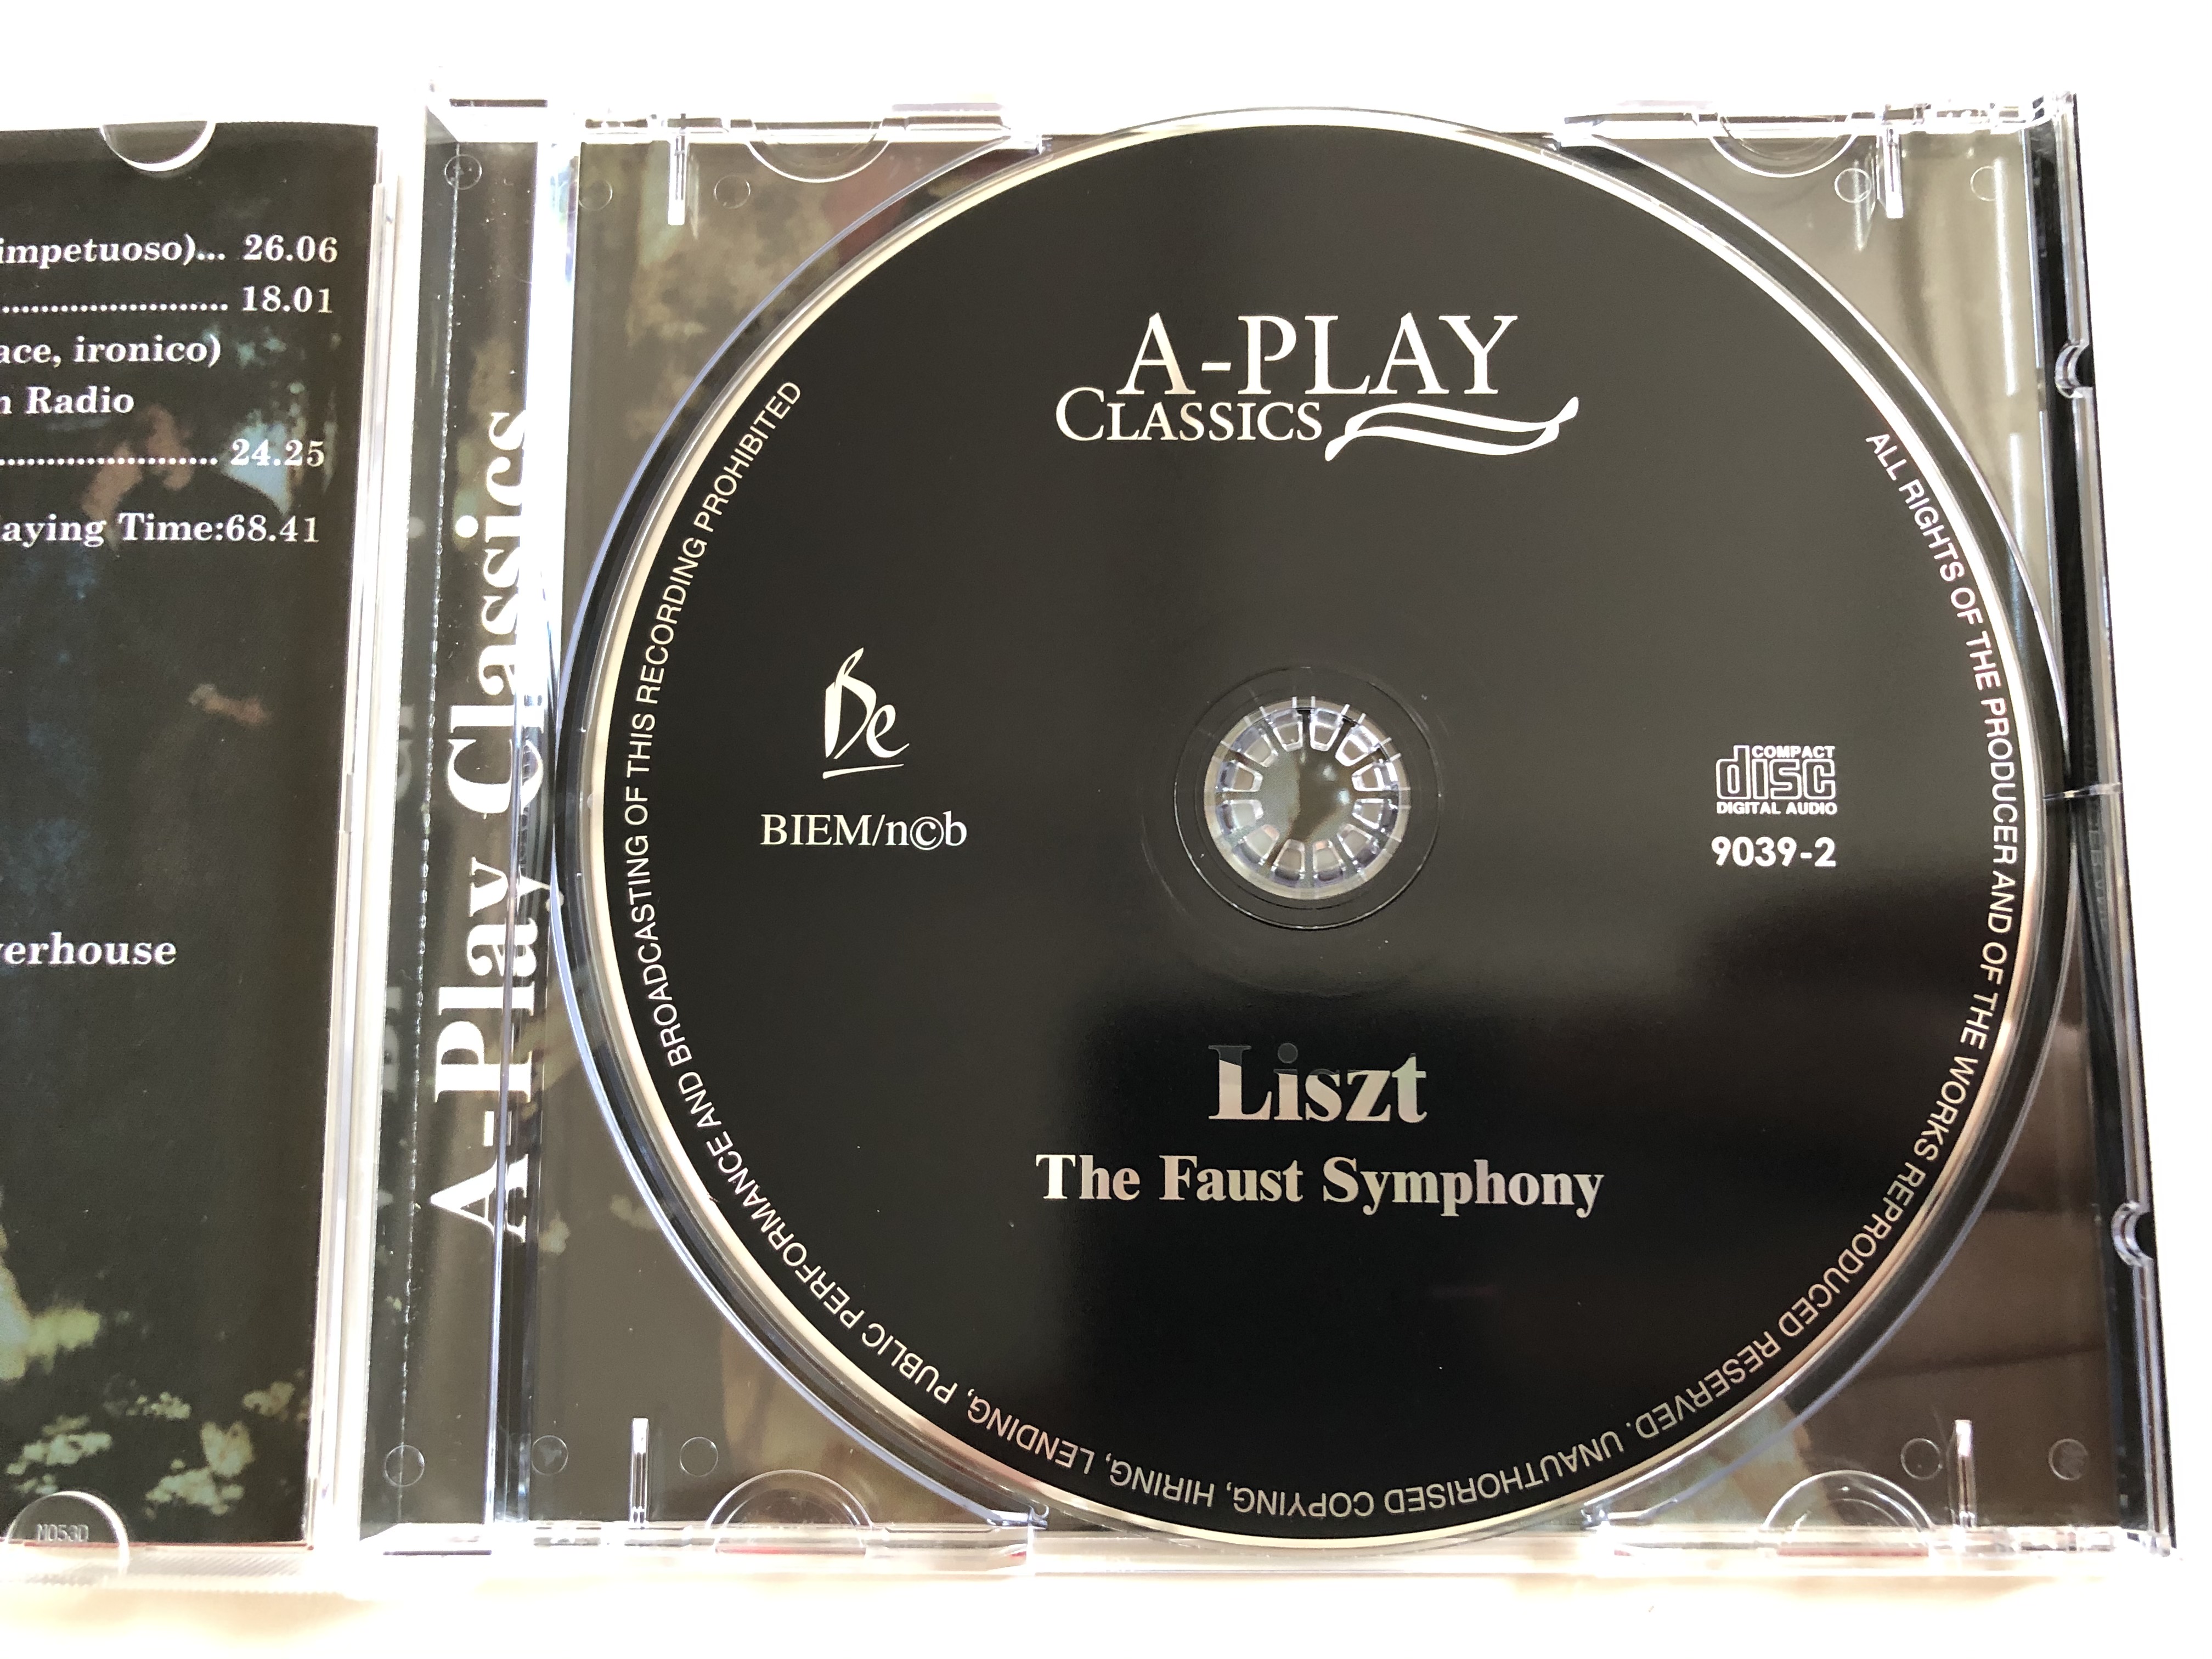 liszt-a-faust-symphony-hungarian-state-symphony-orchestra-conductor-francesco-d-avalos-a-play-classics-audio-cd-2001-9039-2-4-.jpg